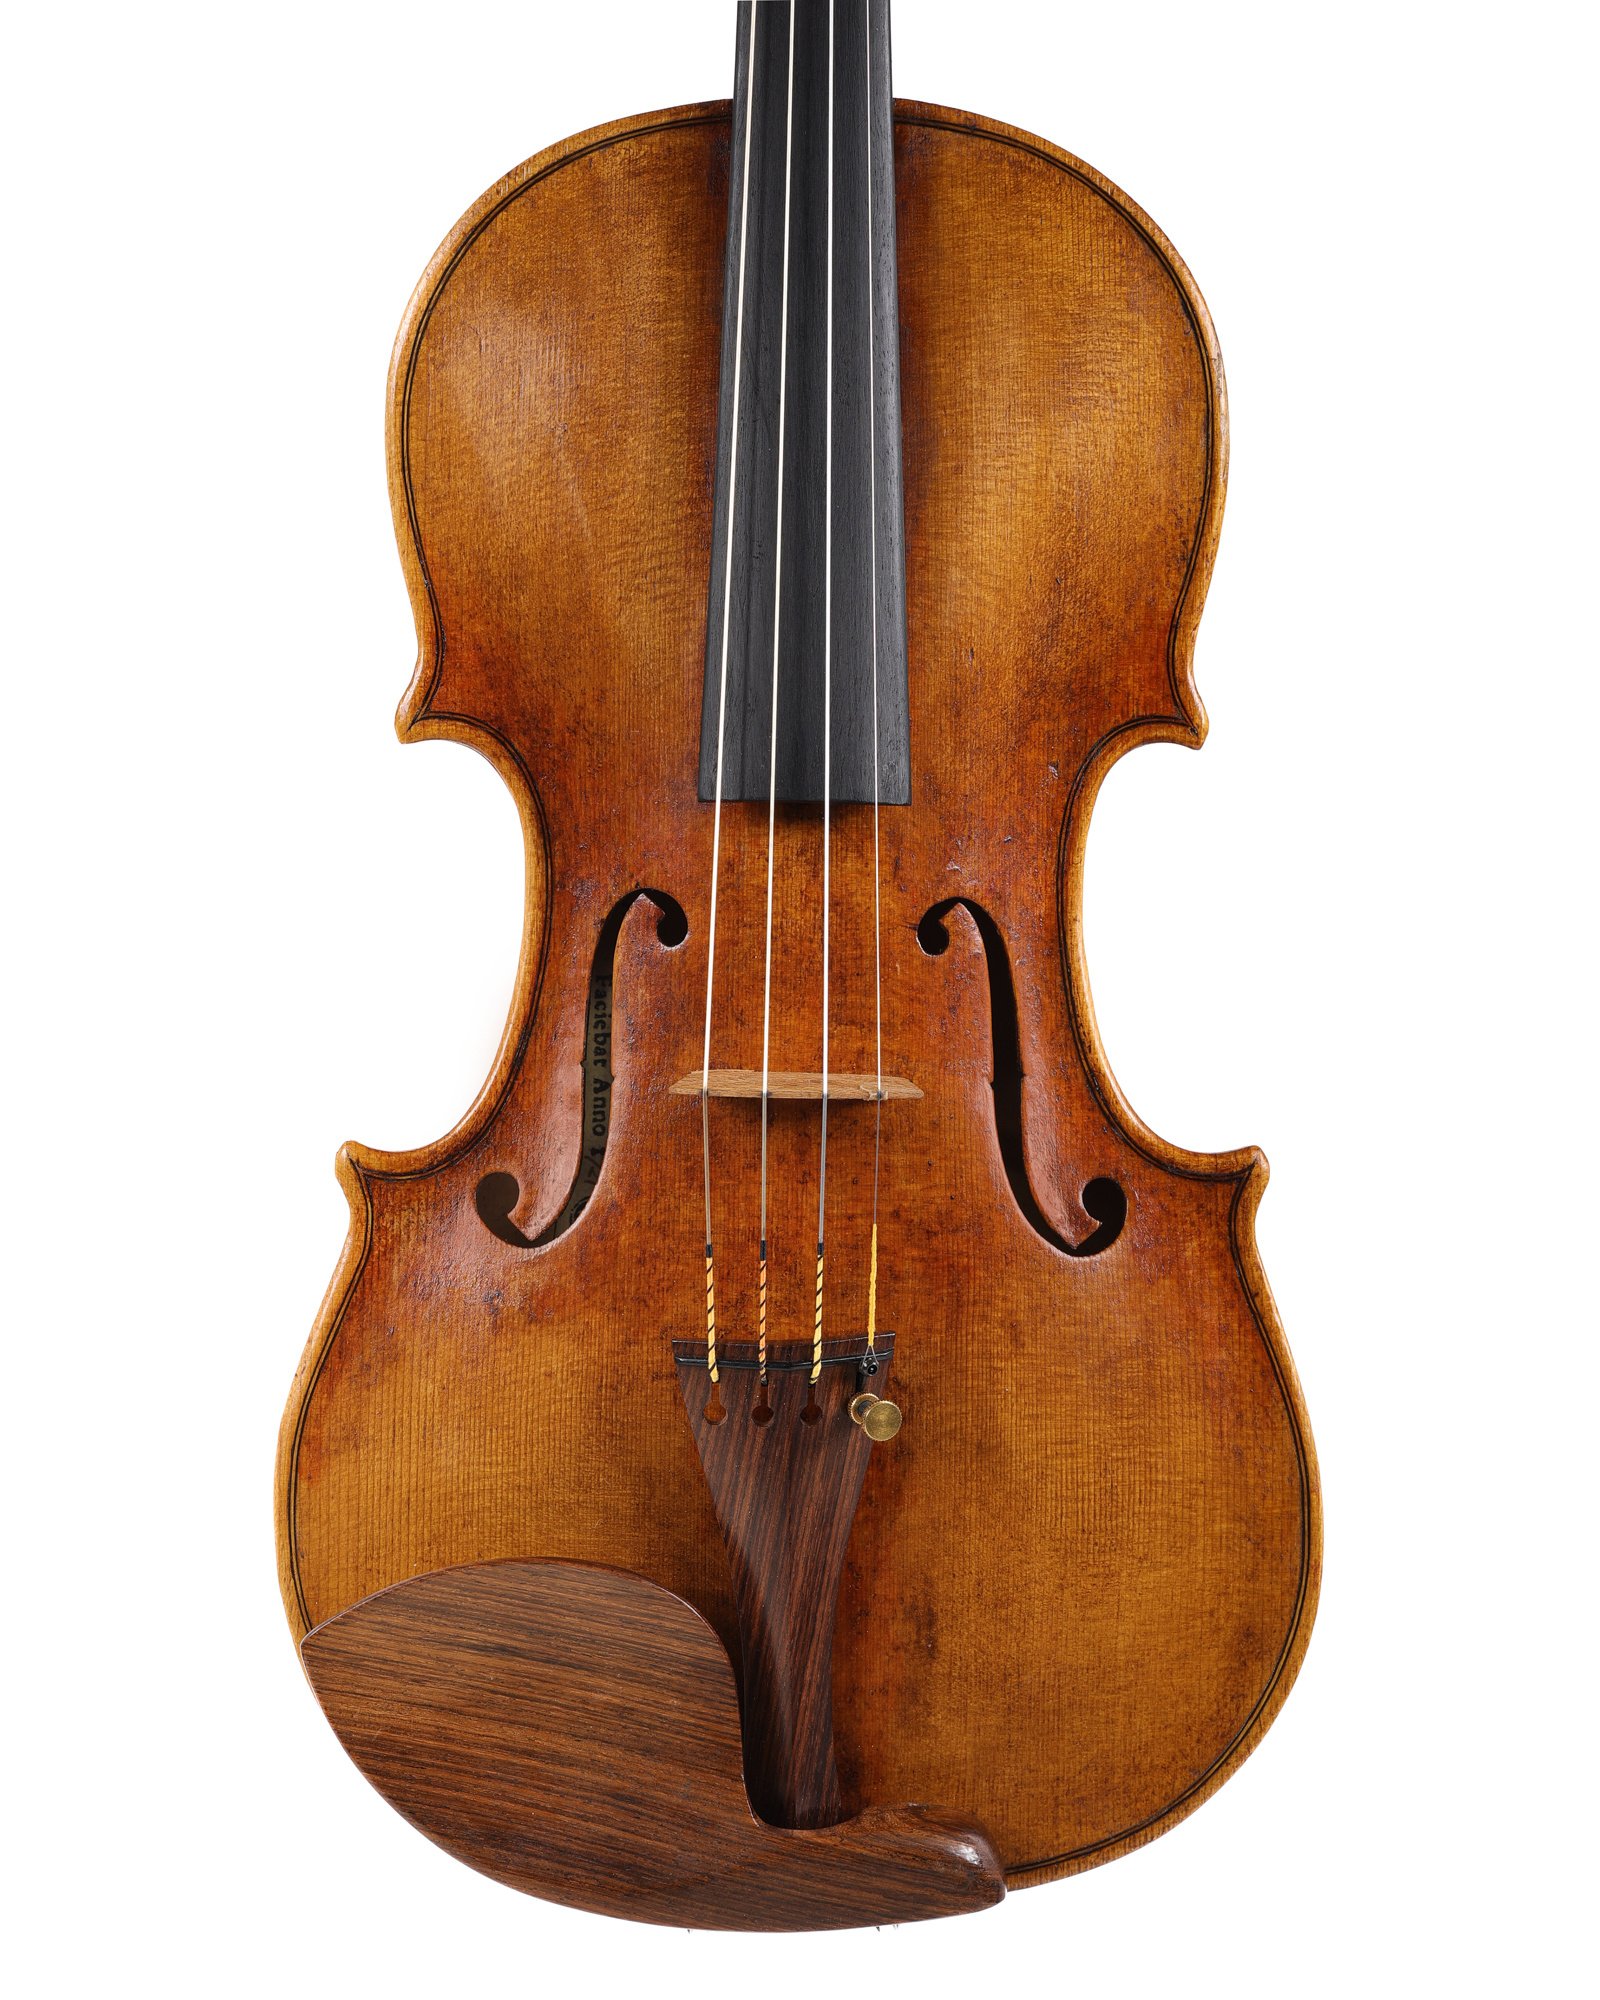 Michael Fischer violin, Stradivarius copy - “Joseph Suk”, Los Angeles, CA, 2021